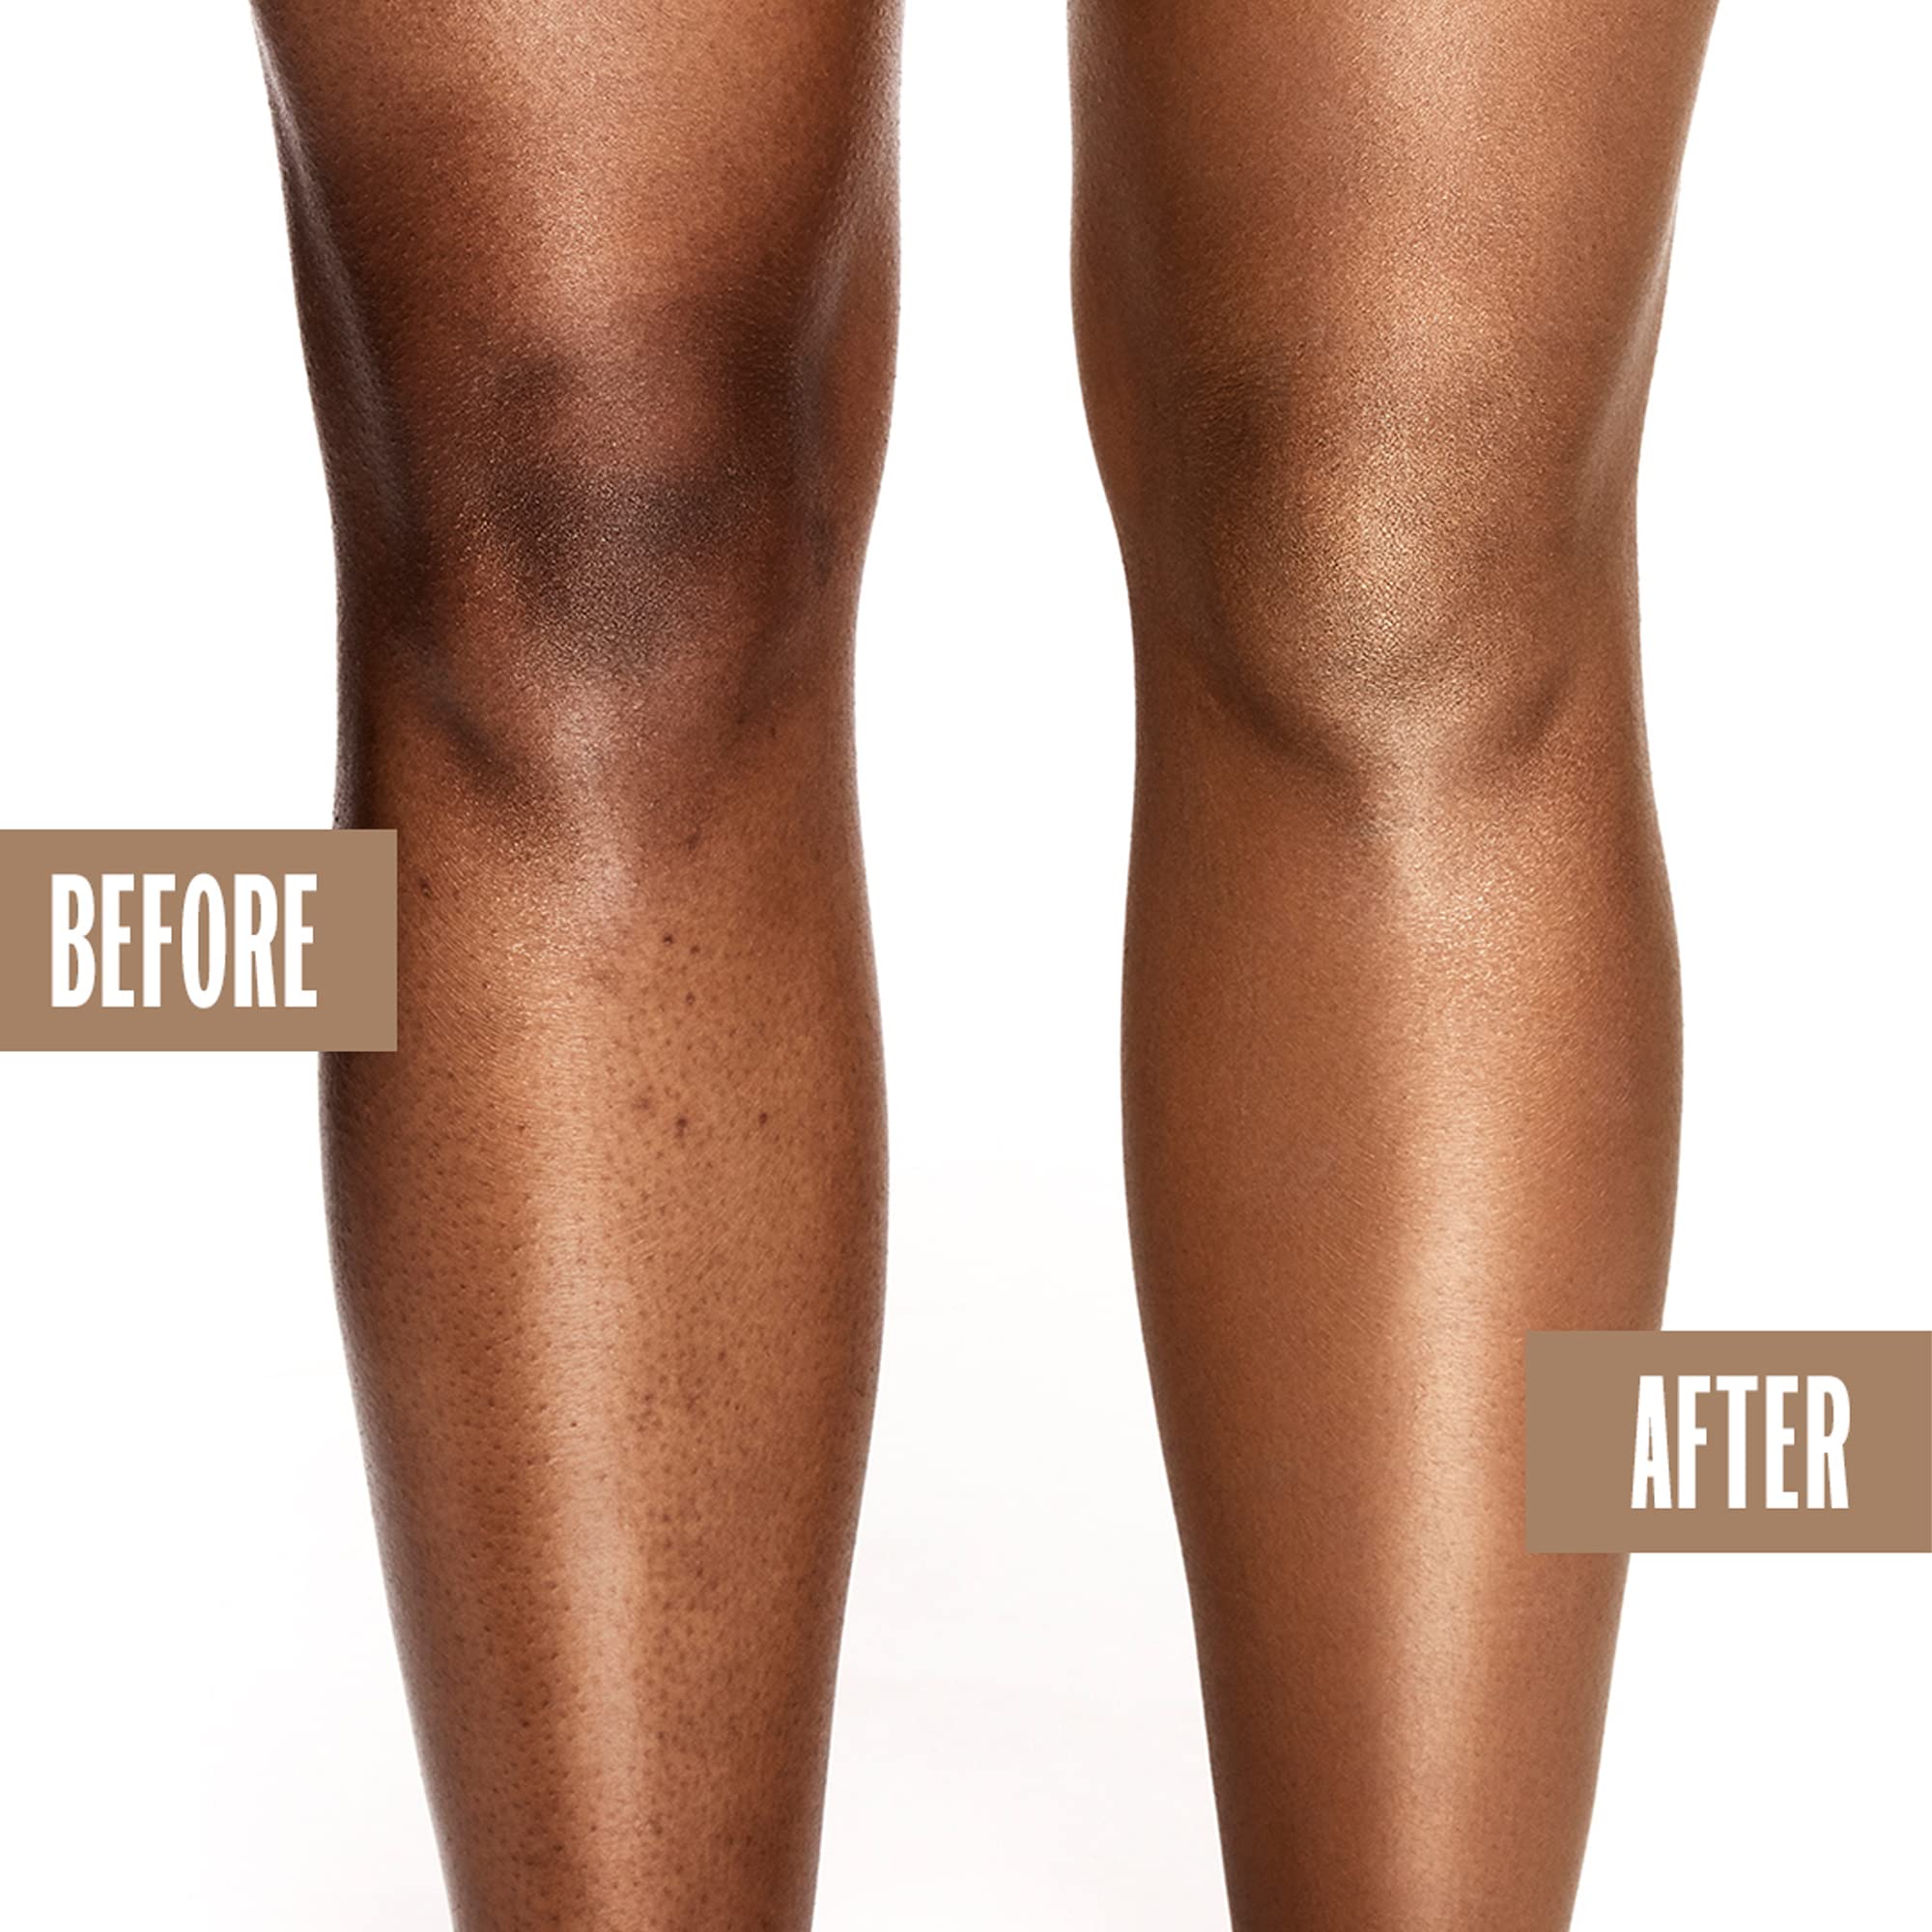 Sally Hansen Airbrush Legs Tan/Bronze - Leg Makeup 4 oz